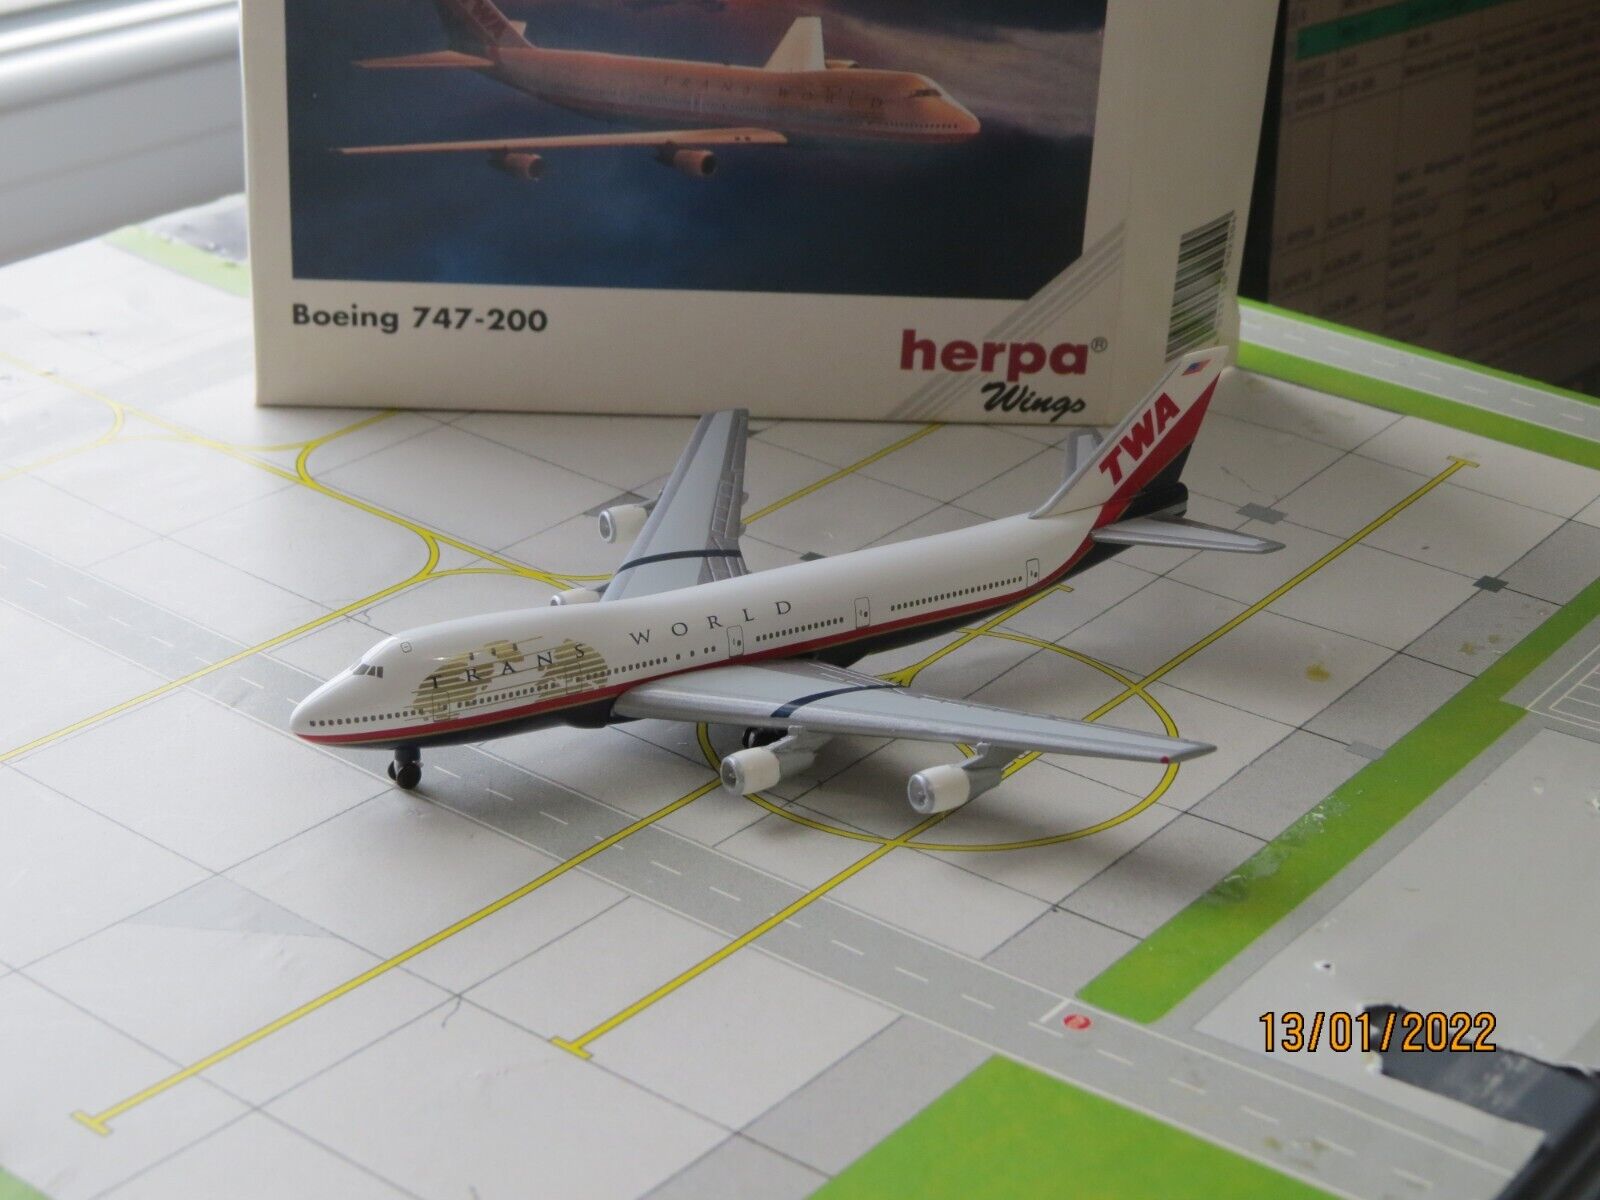 HERPA 1/500 SCALE TWA 502504 BOX MISPRINT 747-200 INSTEAD OF 747-100